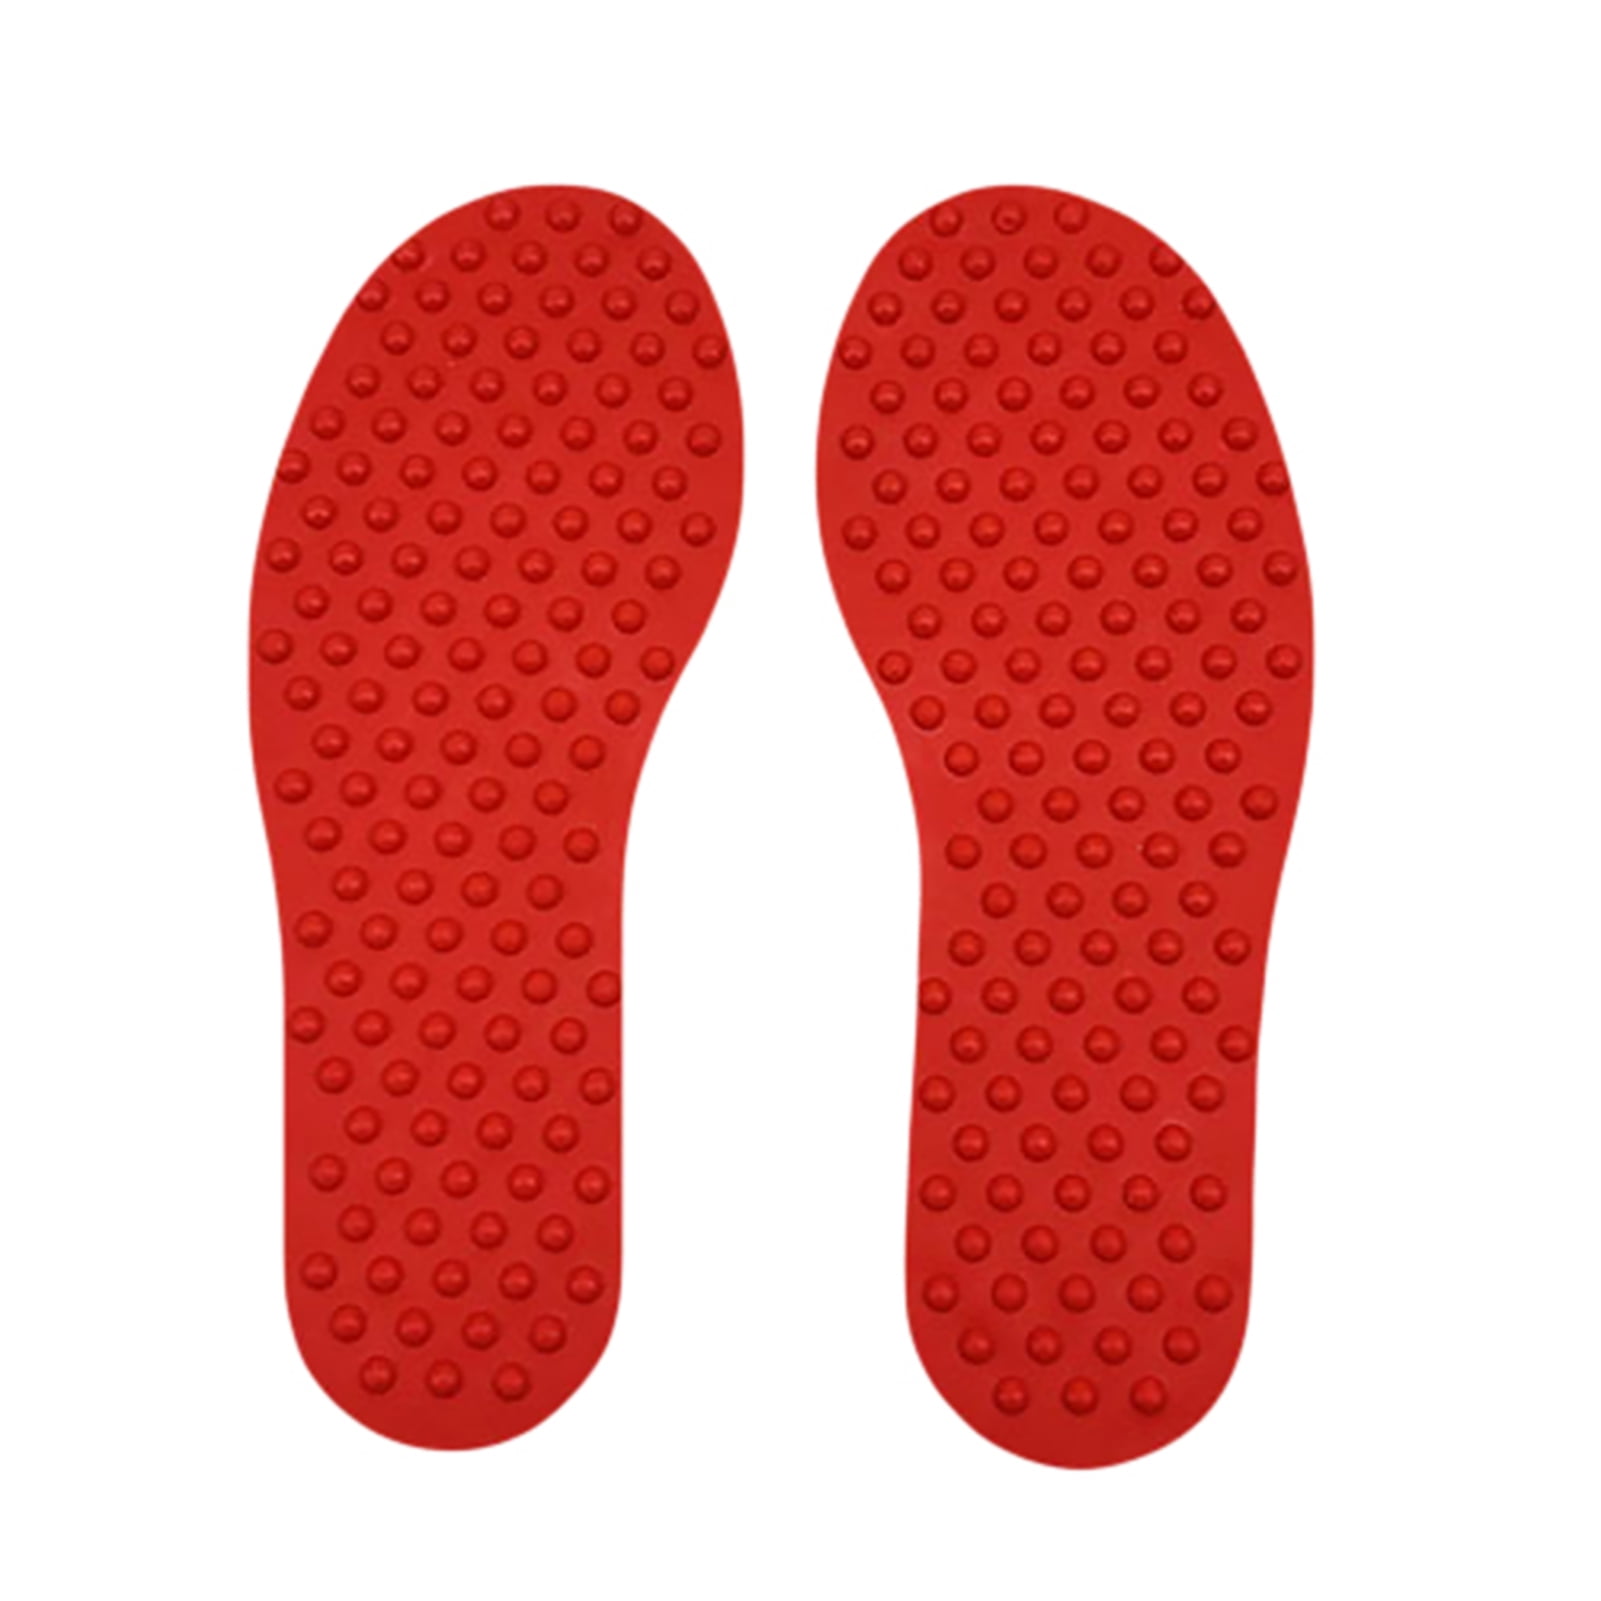 Plastic Footprint Sensory Training Massage Equipment Kids Outdoor Toy Red 